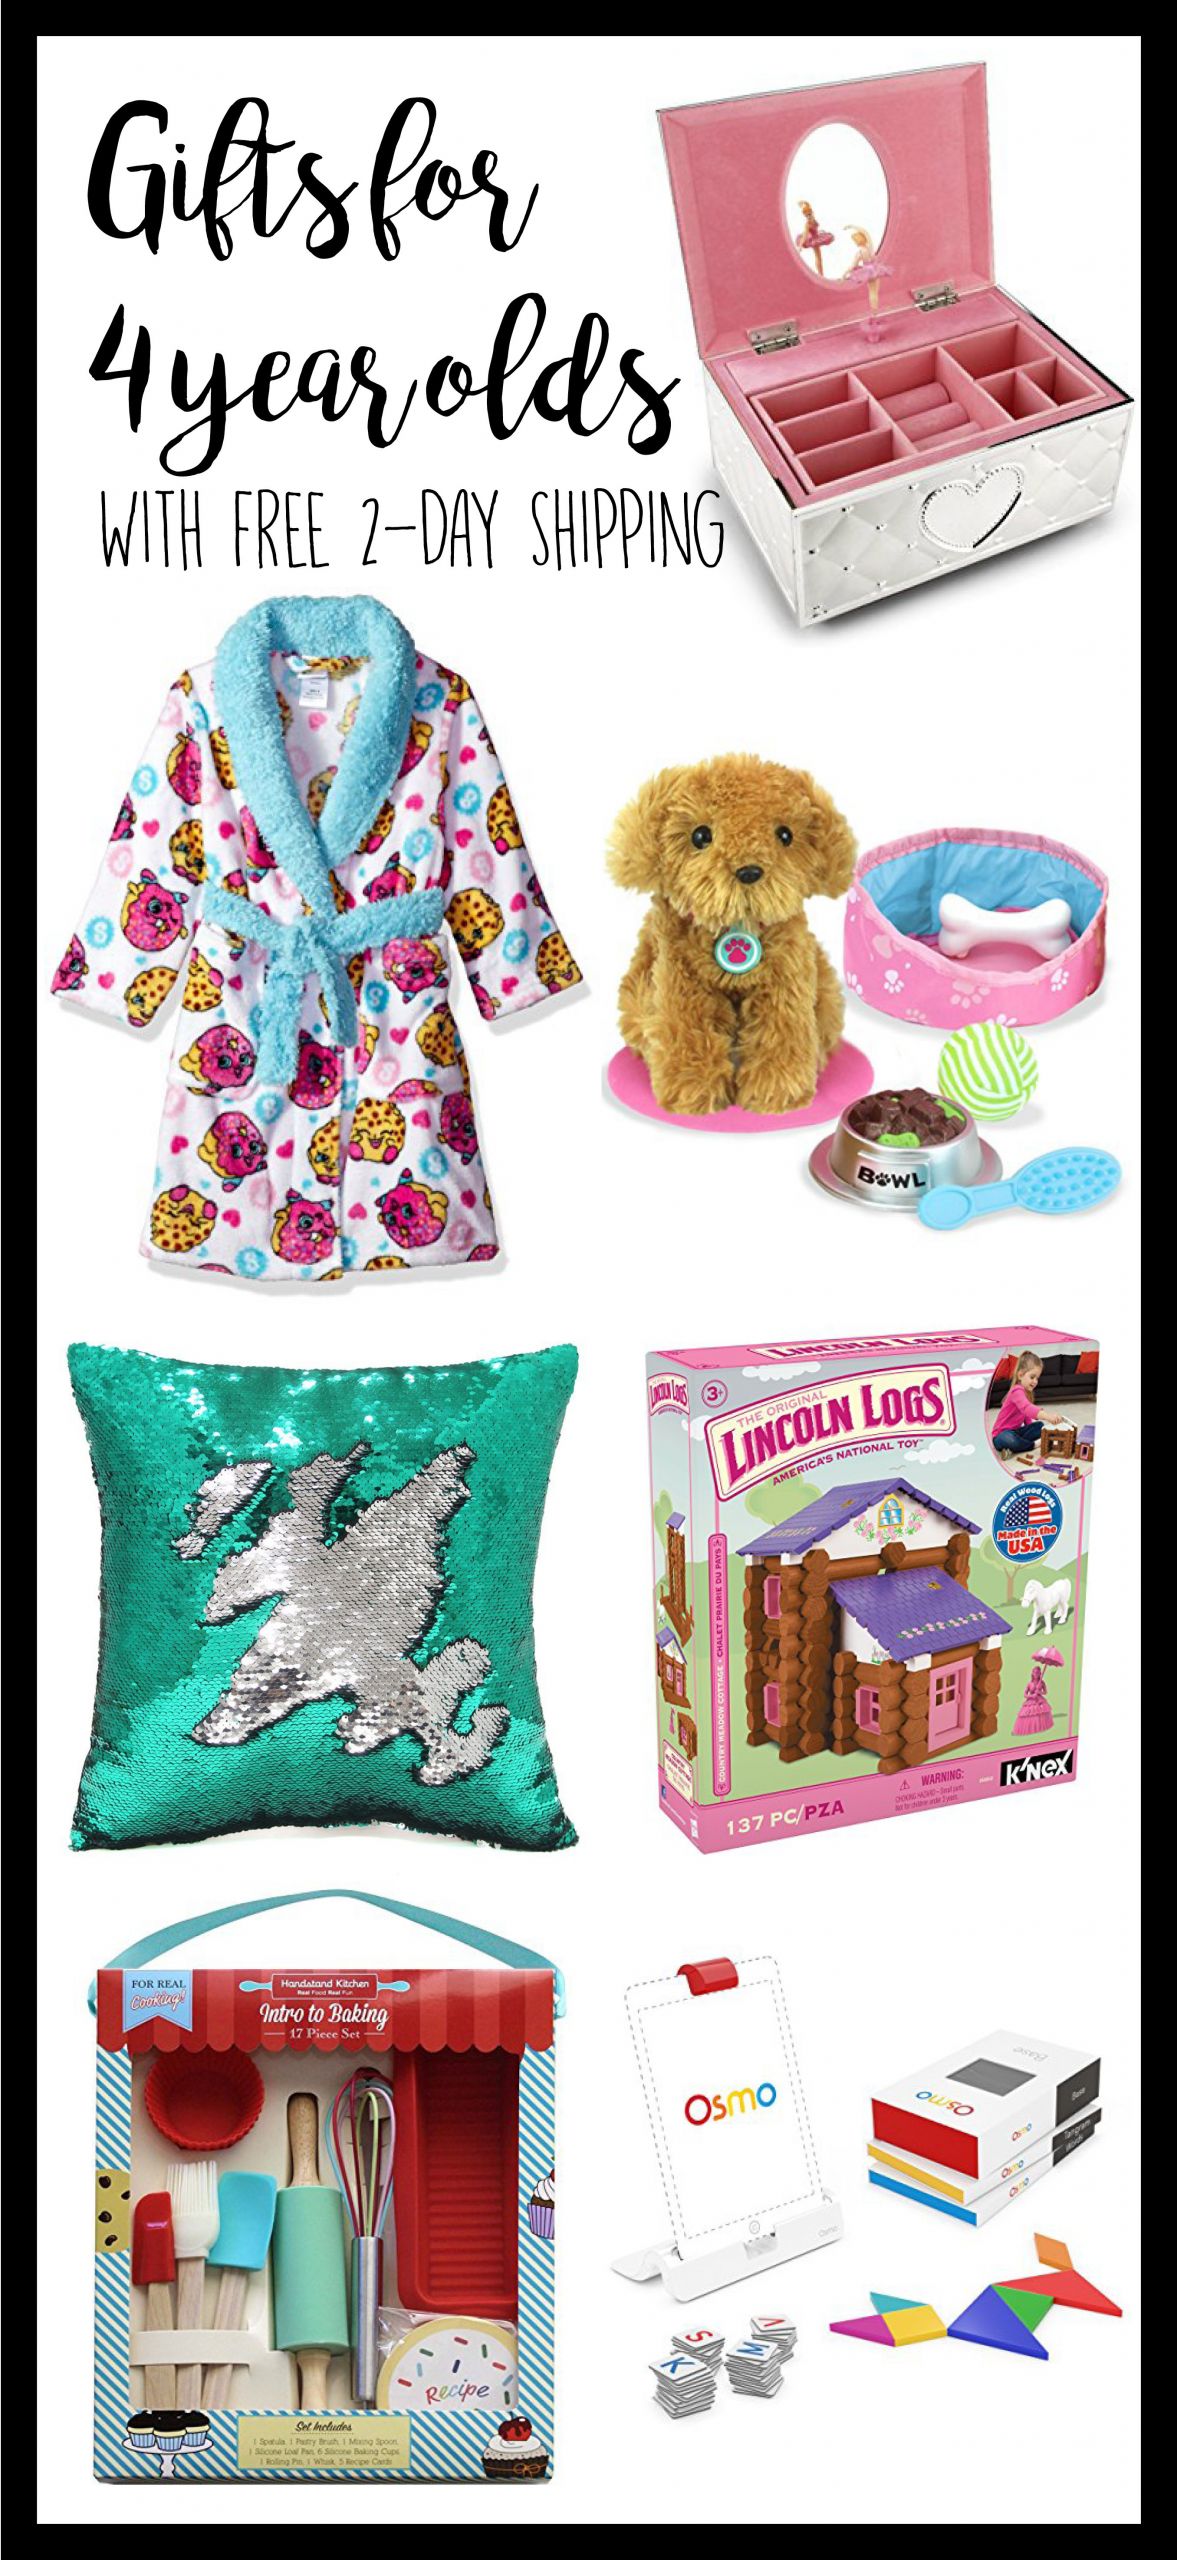 4 Yr Old Girl Birthday Gift Ideas
 4 Year Old Gift Ideas Gift ideas for 4 year old Girls